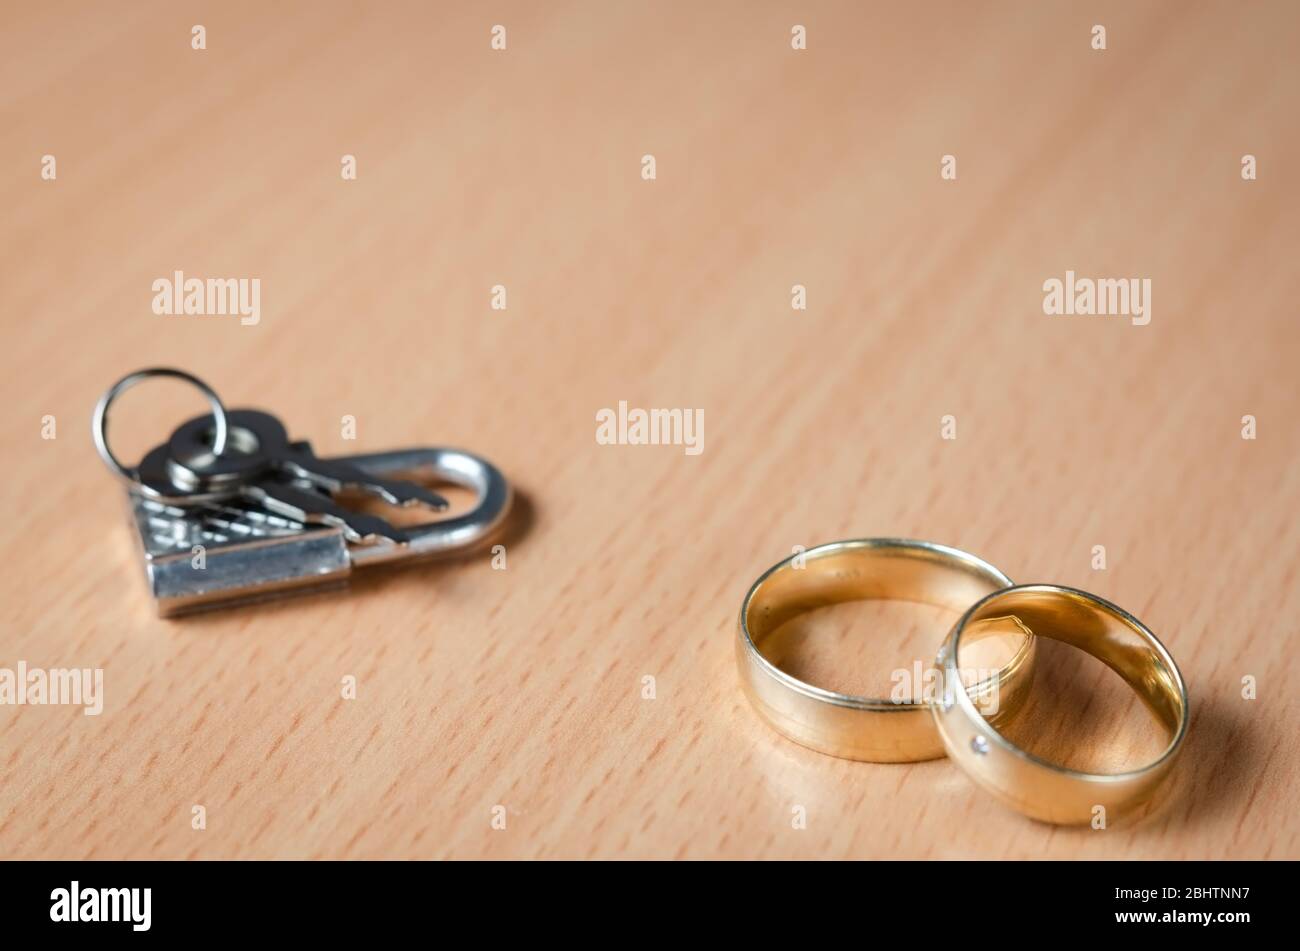 Wedding Ring PNG Images & PSDs for Download | PixelSquid - S113879766